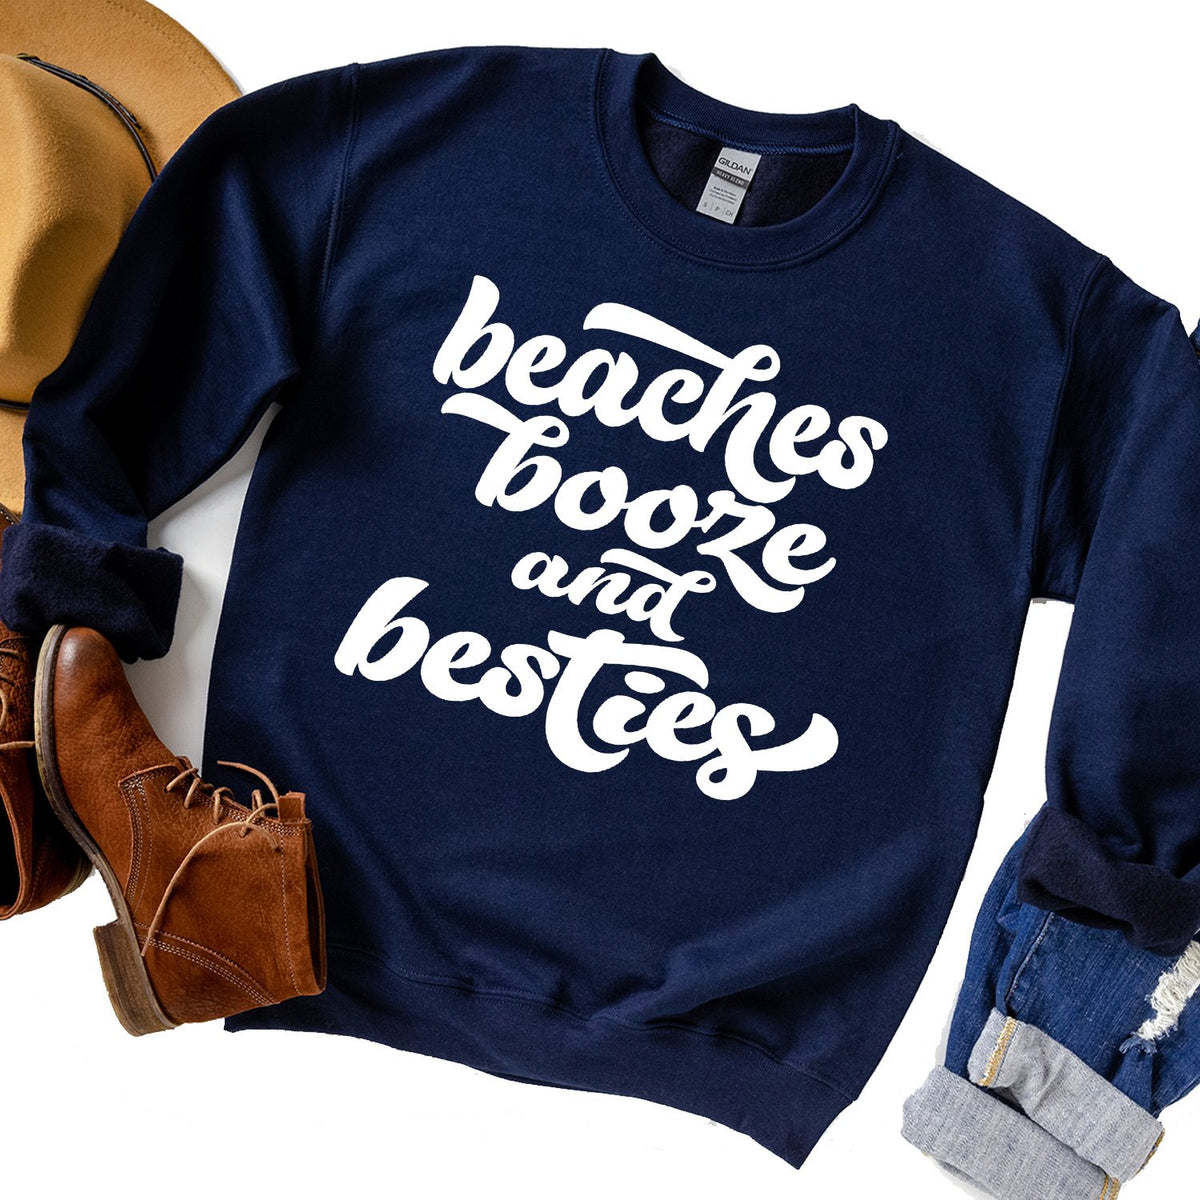 Beaches Booze and Besties - Long Sleeve Heavy Crewneck Sweatshirt